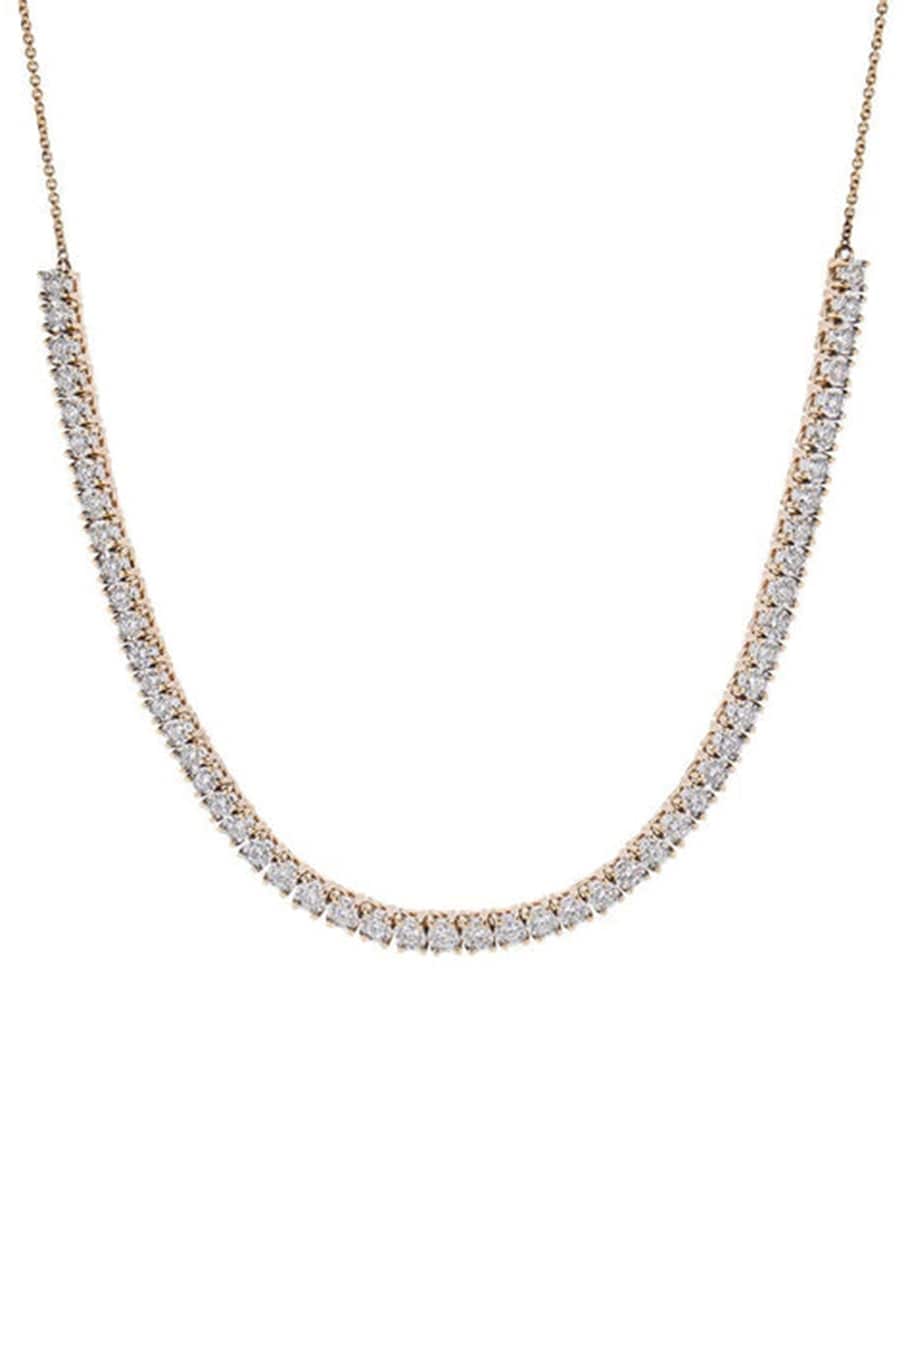 DANA REBECCA DESIGNS-Rose Gold Ava Bea Diamond Tennis Necklace-ROSE GOLD